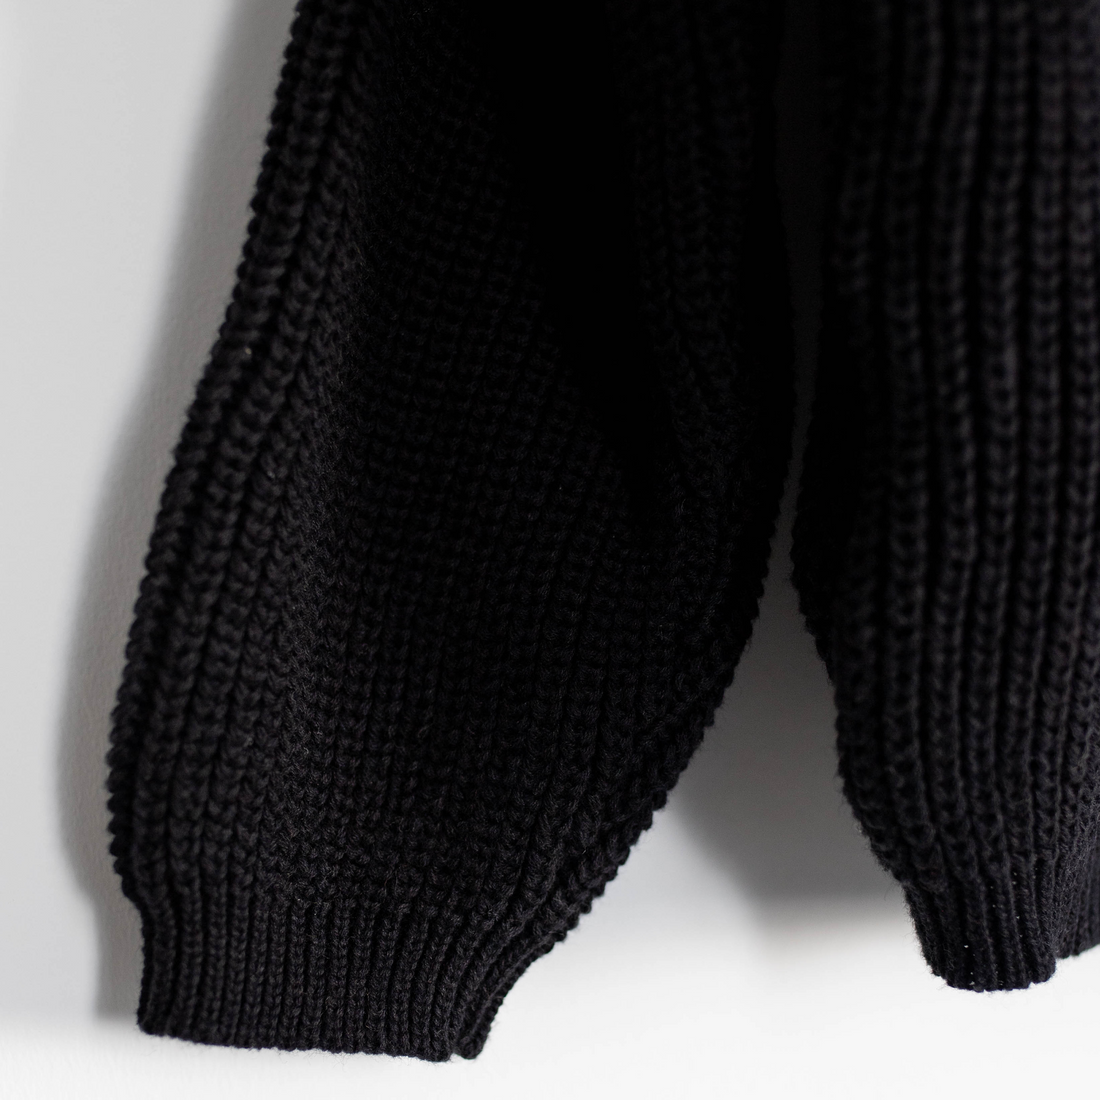 Black knit